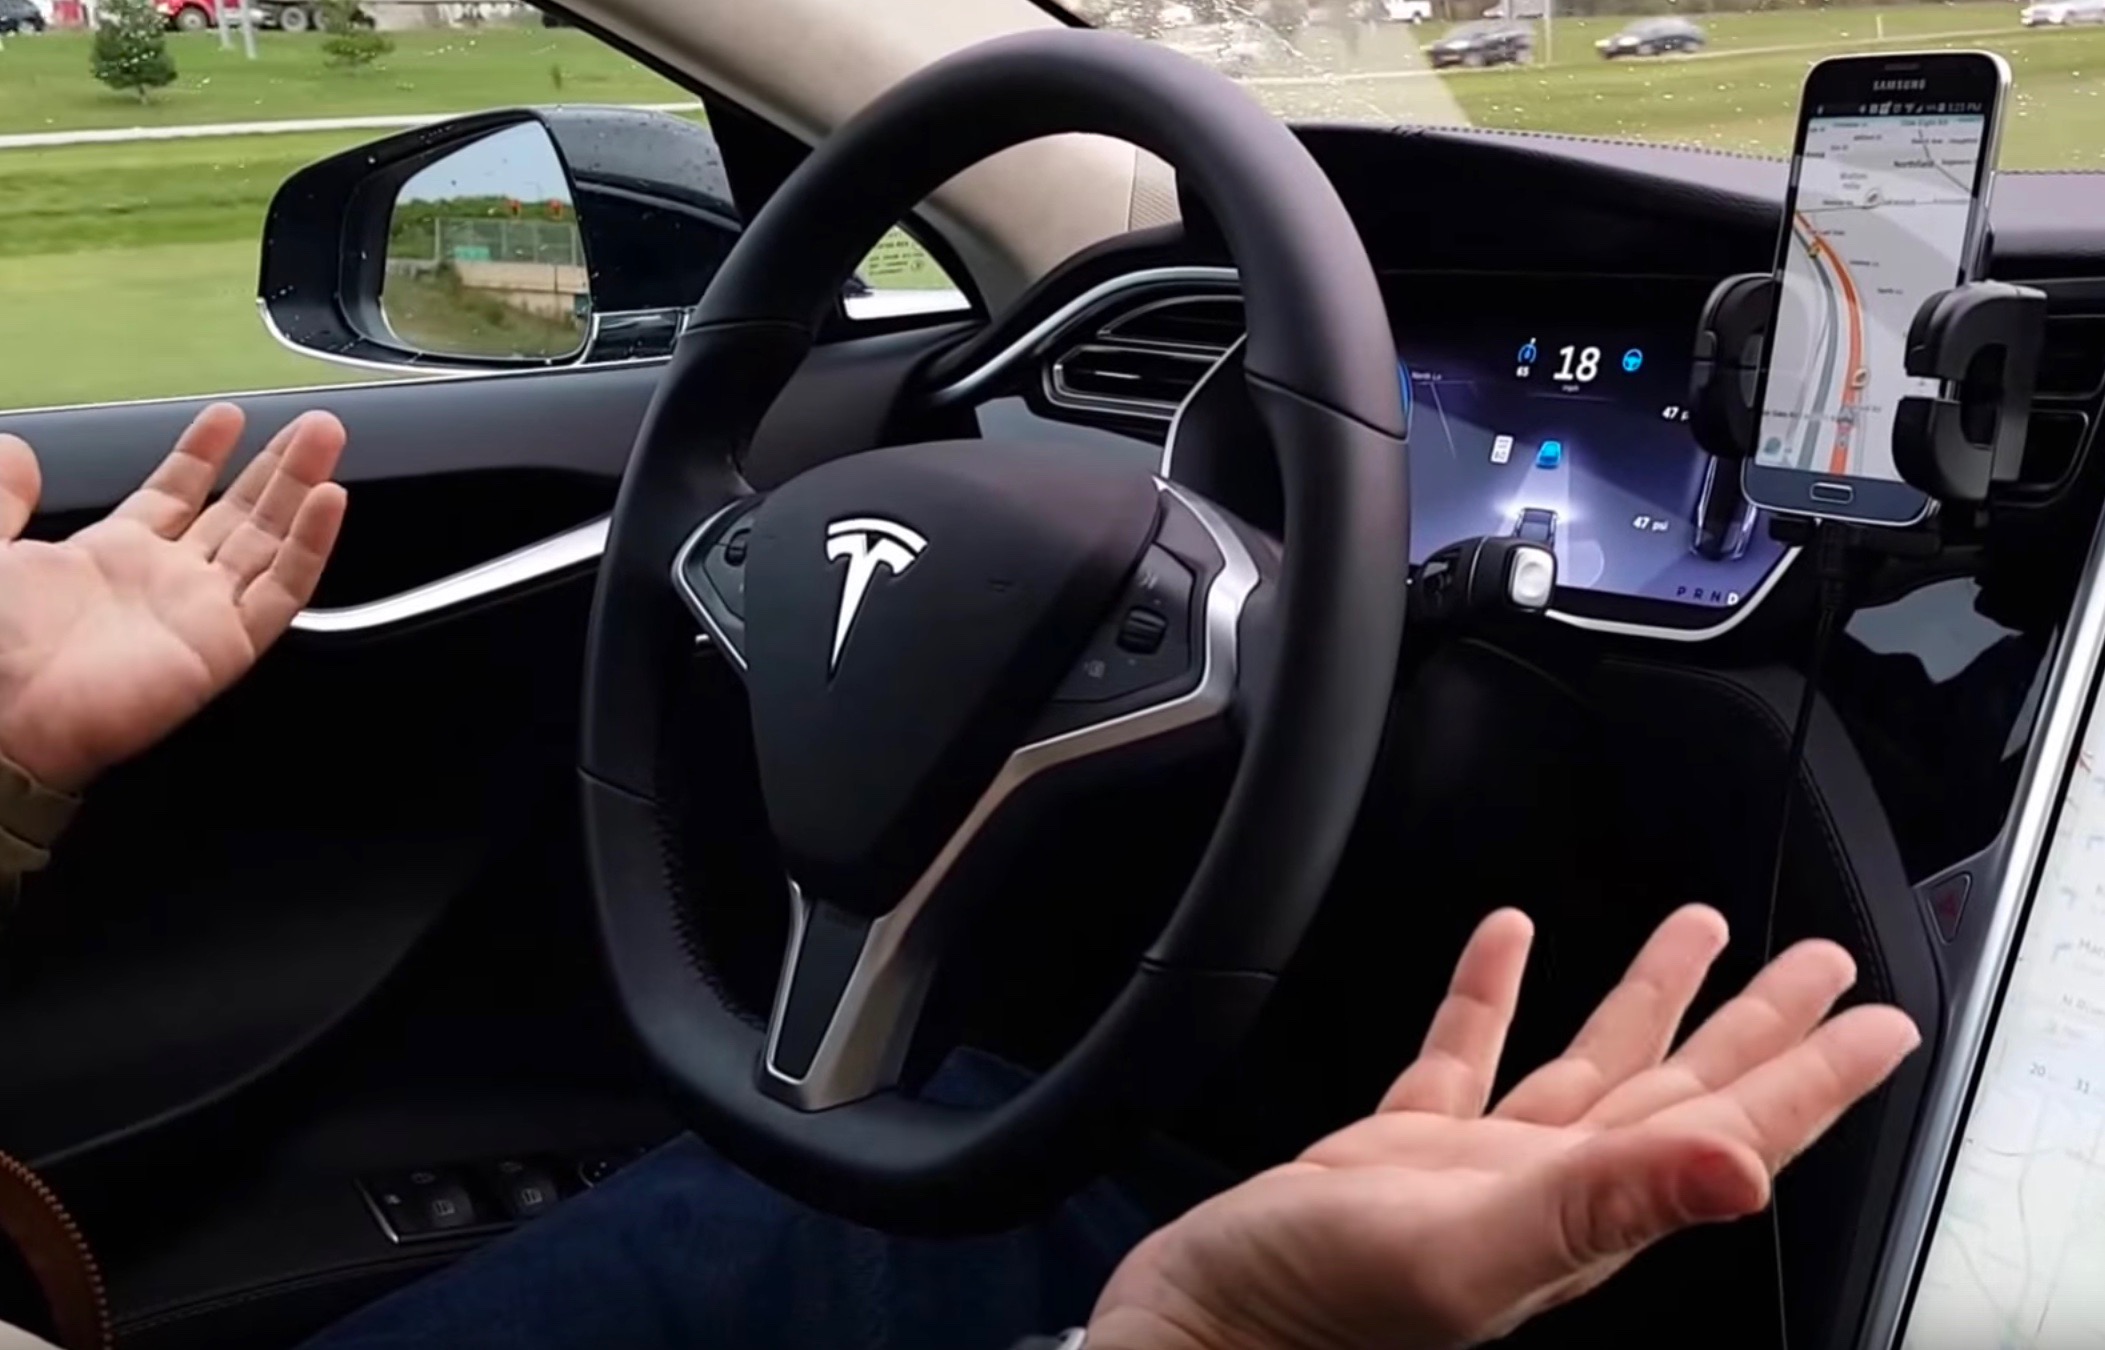 Tesla Model S Autopilot involved in crash, kills driver